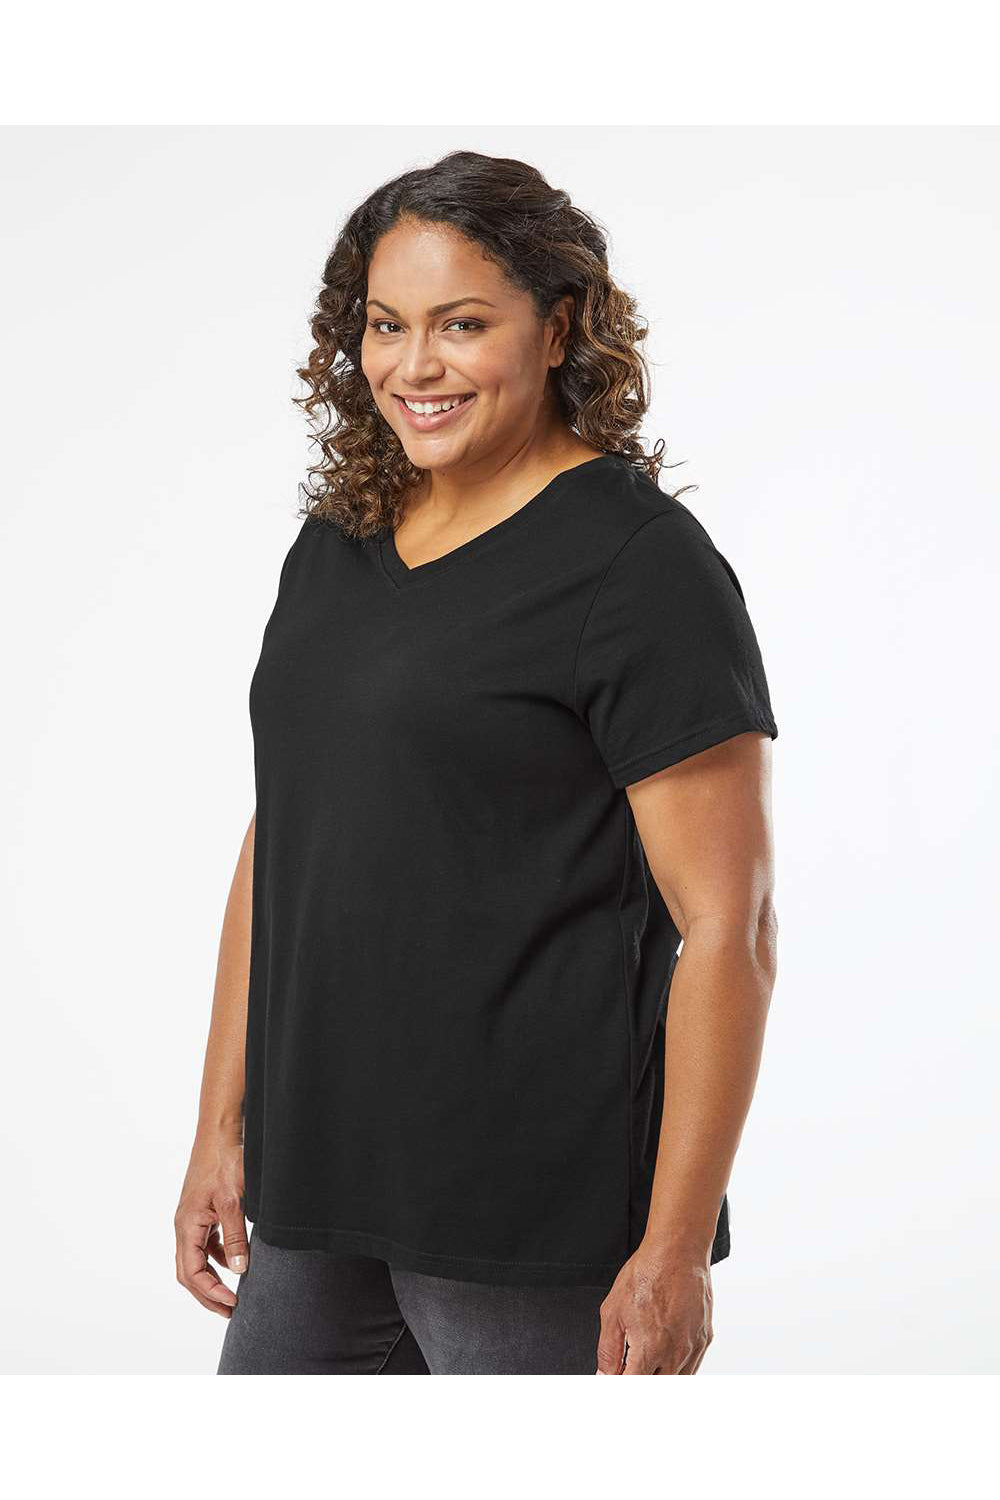 LAT 3817 Womens Curvy Collection Fine Jersey Short Sleeve V-Neck T-Shirt Blended Black Model Side